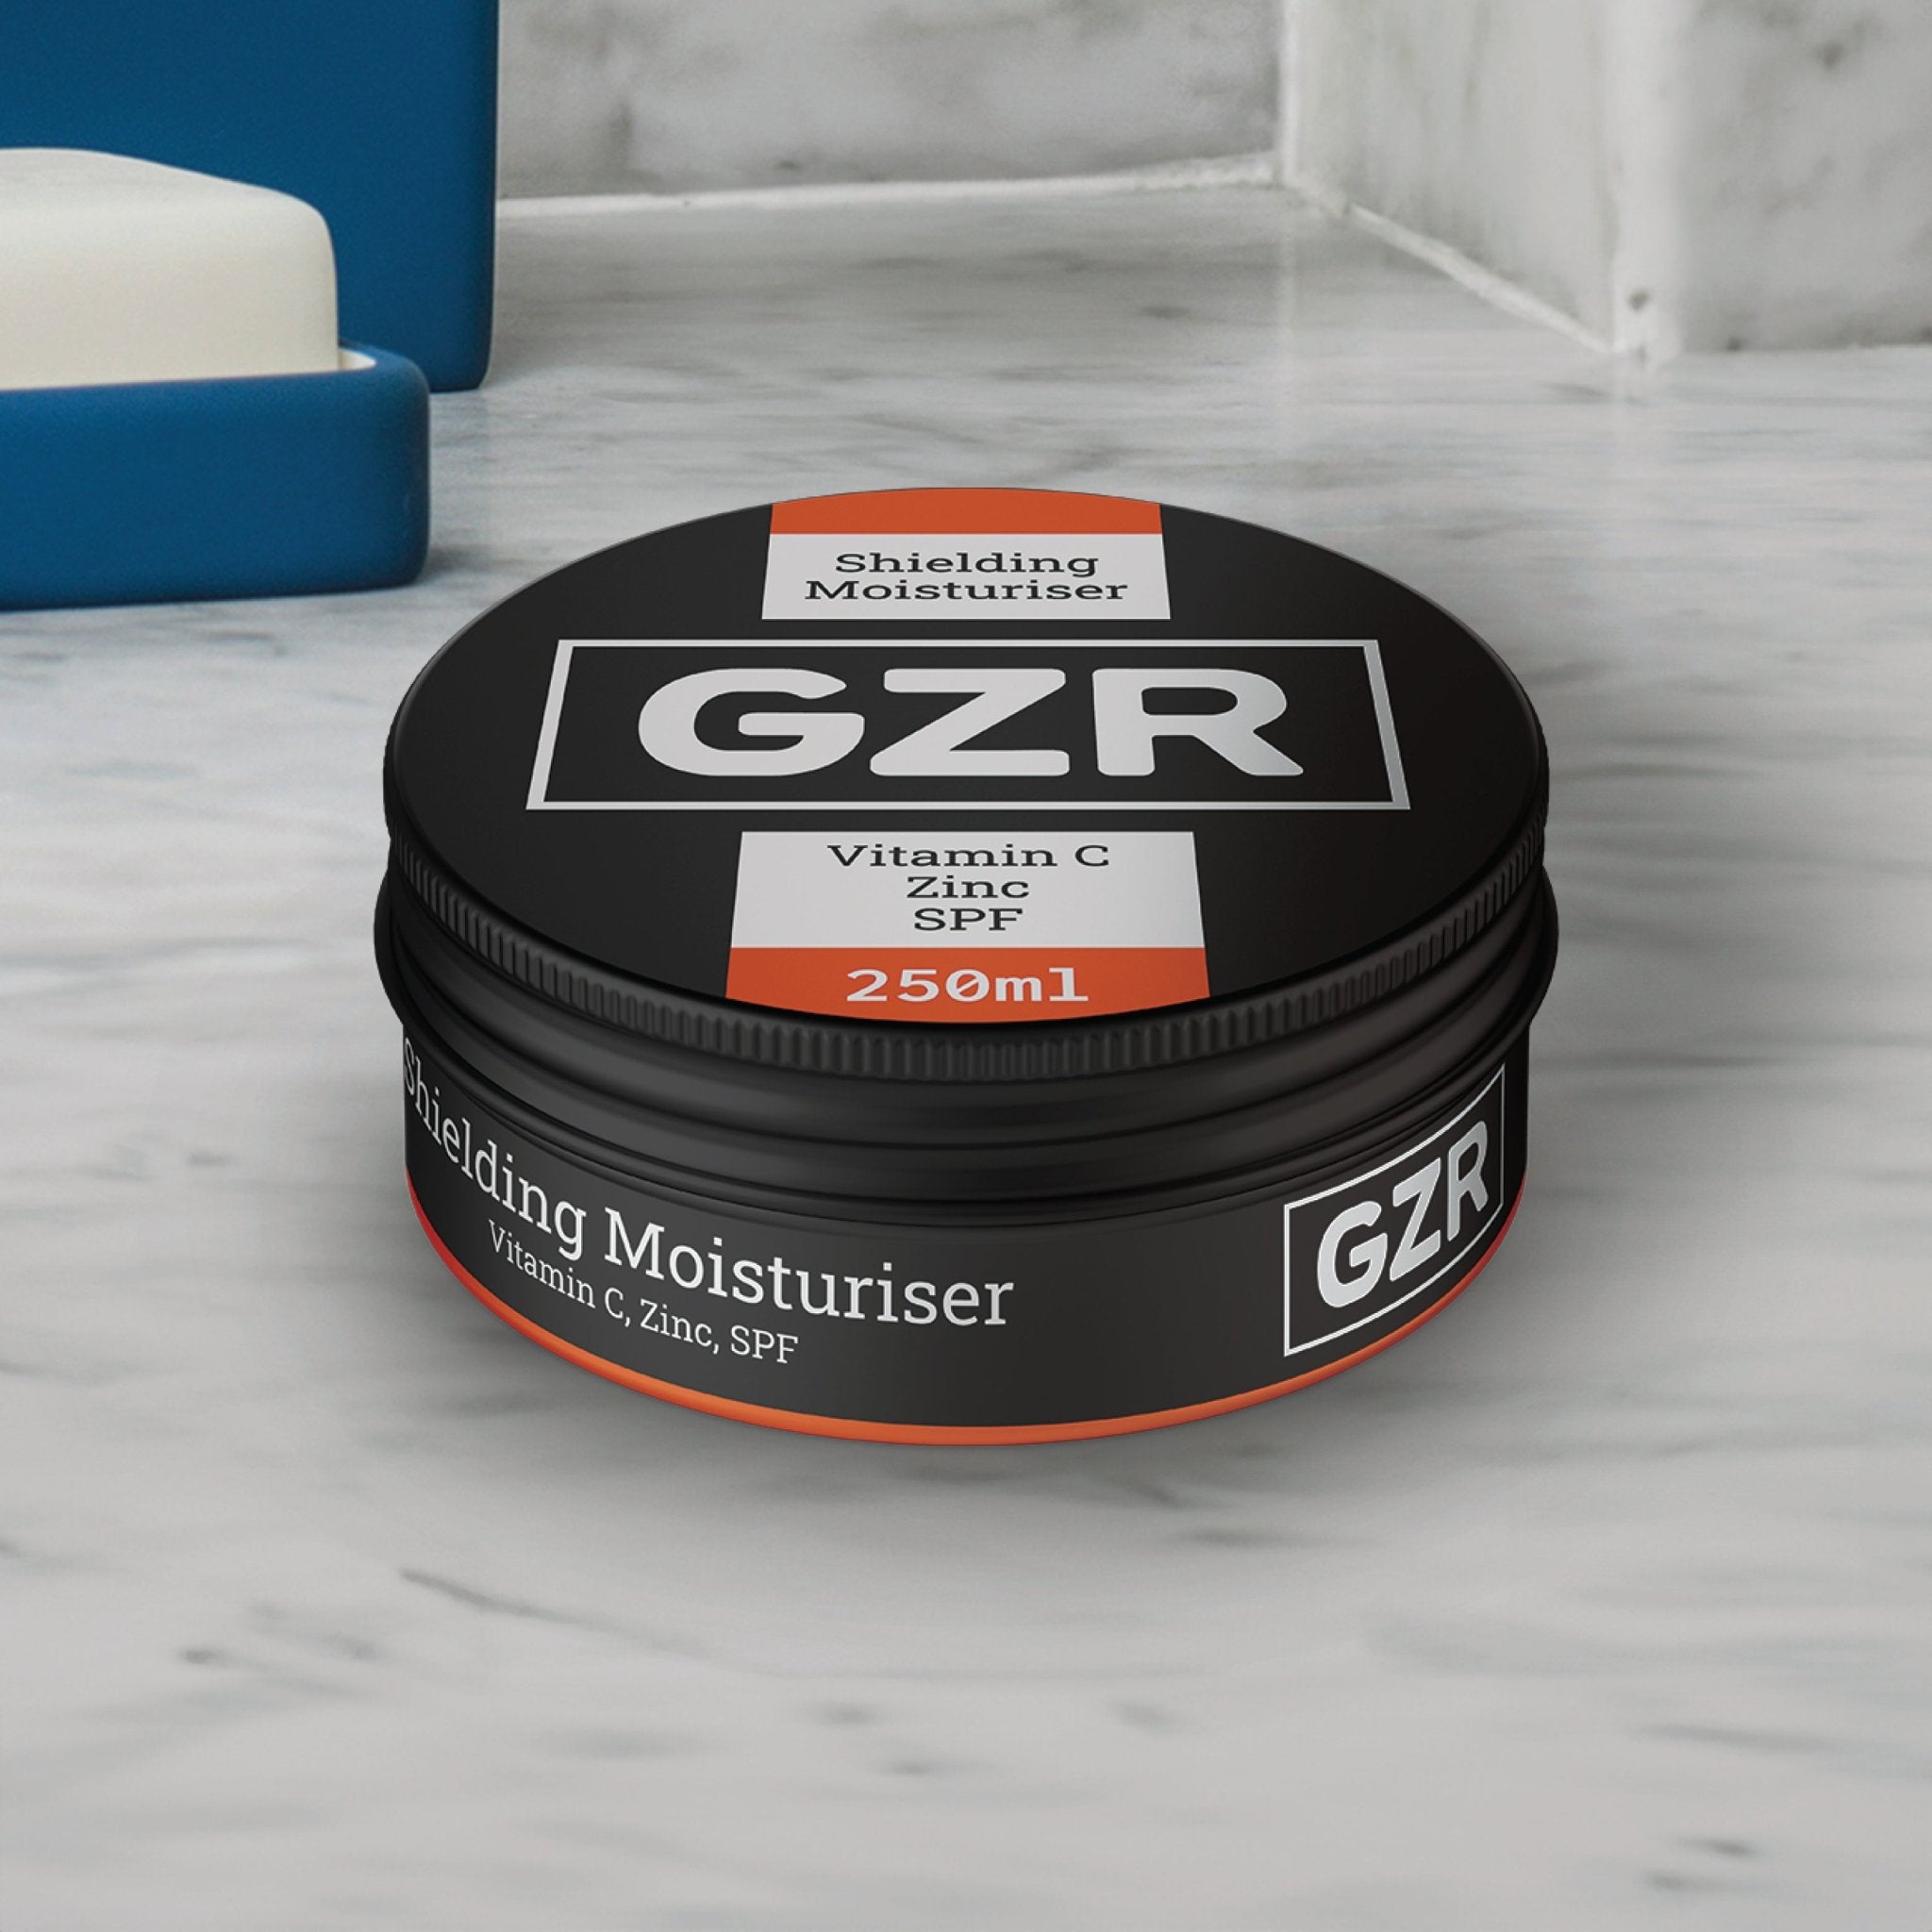 Shielding Moisturiser, 250ml - GZR